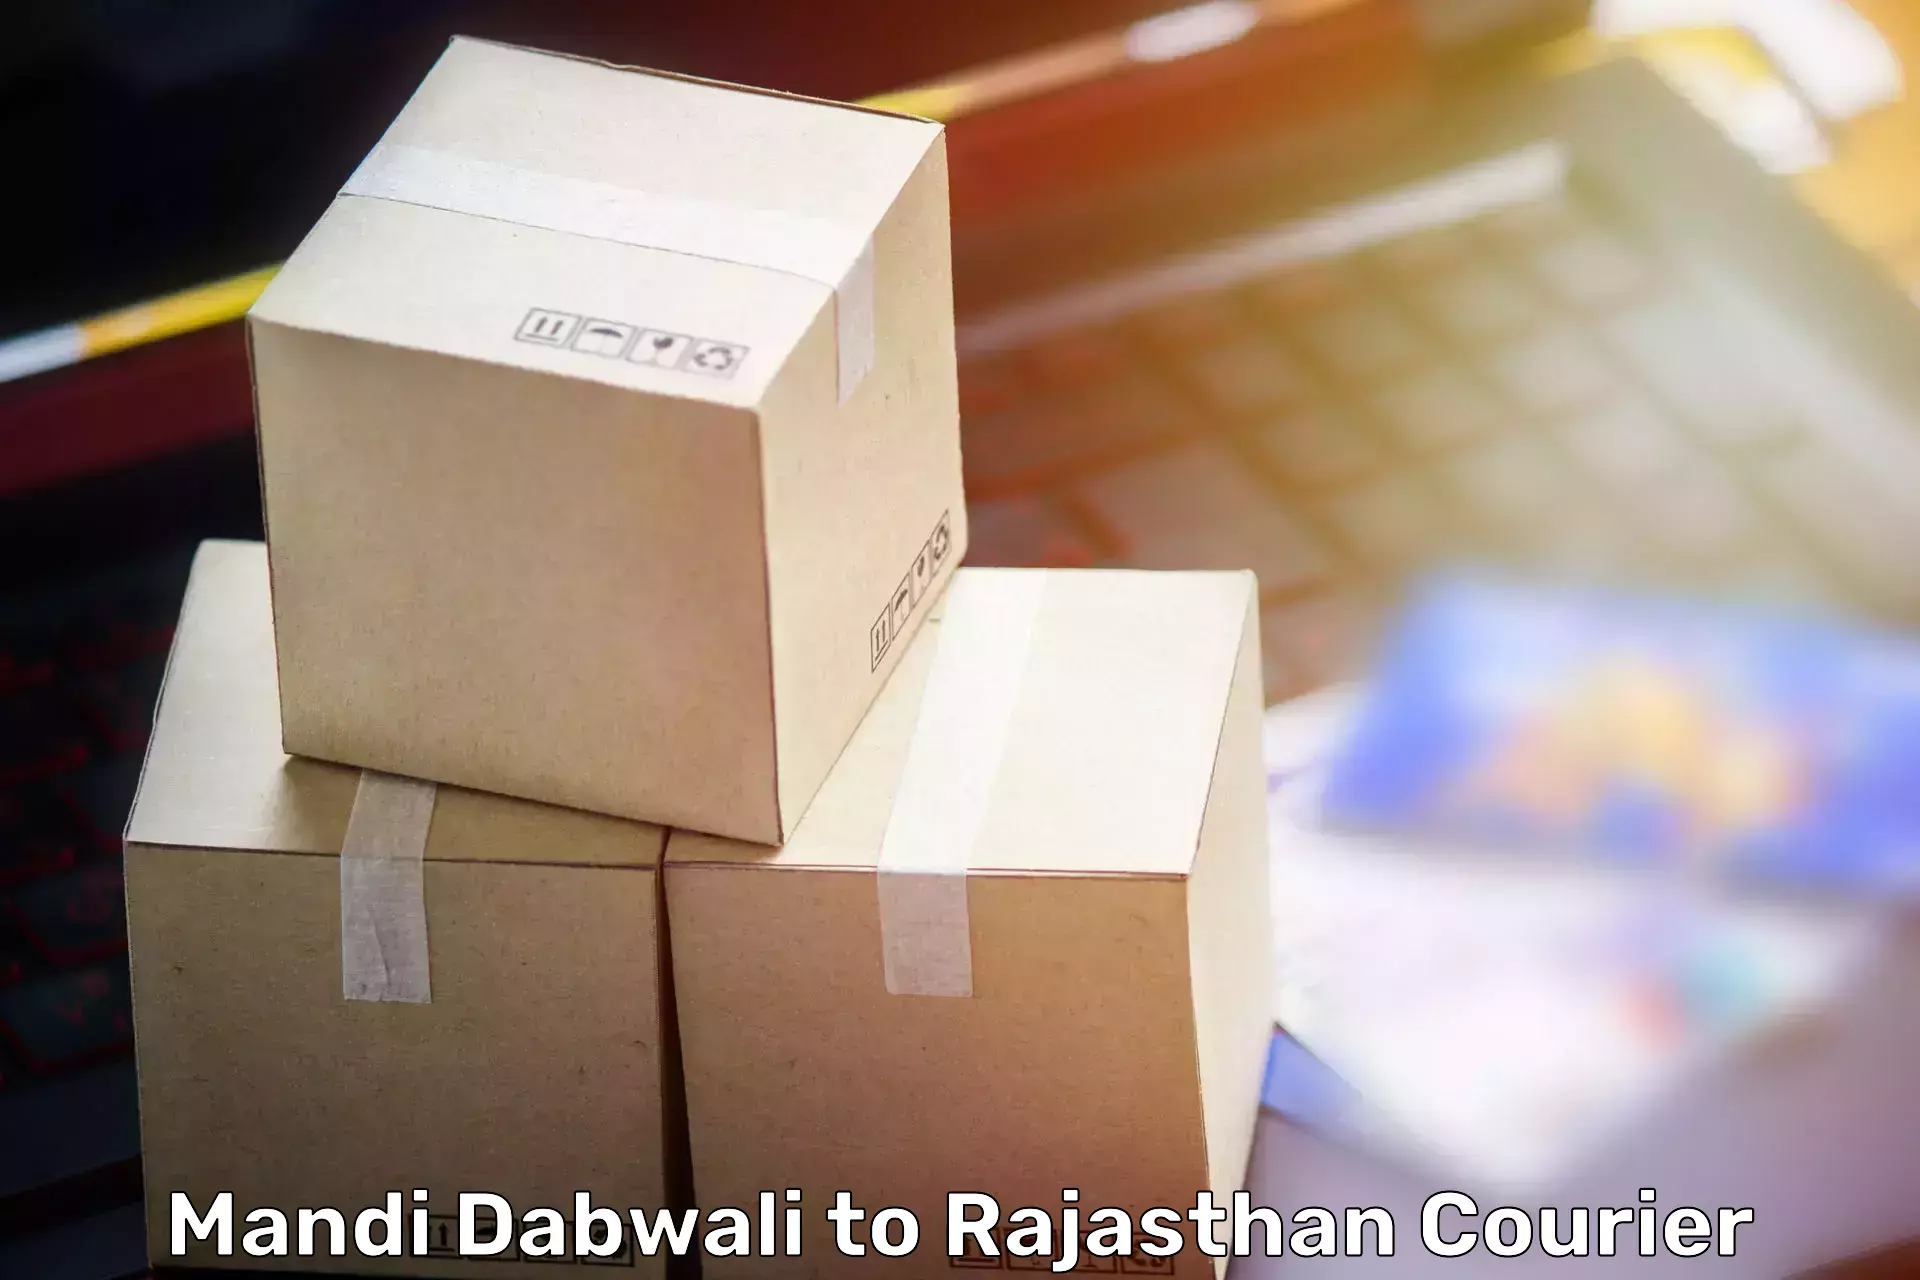 Home goods moving company in Mandi Dabwali to Bikaner